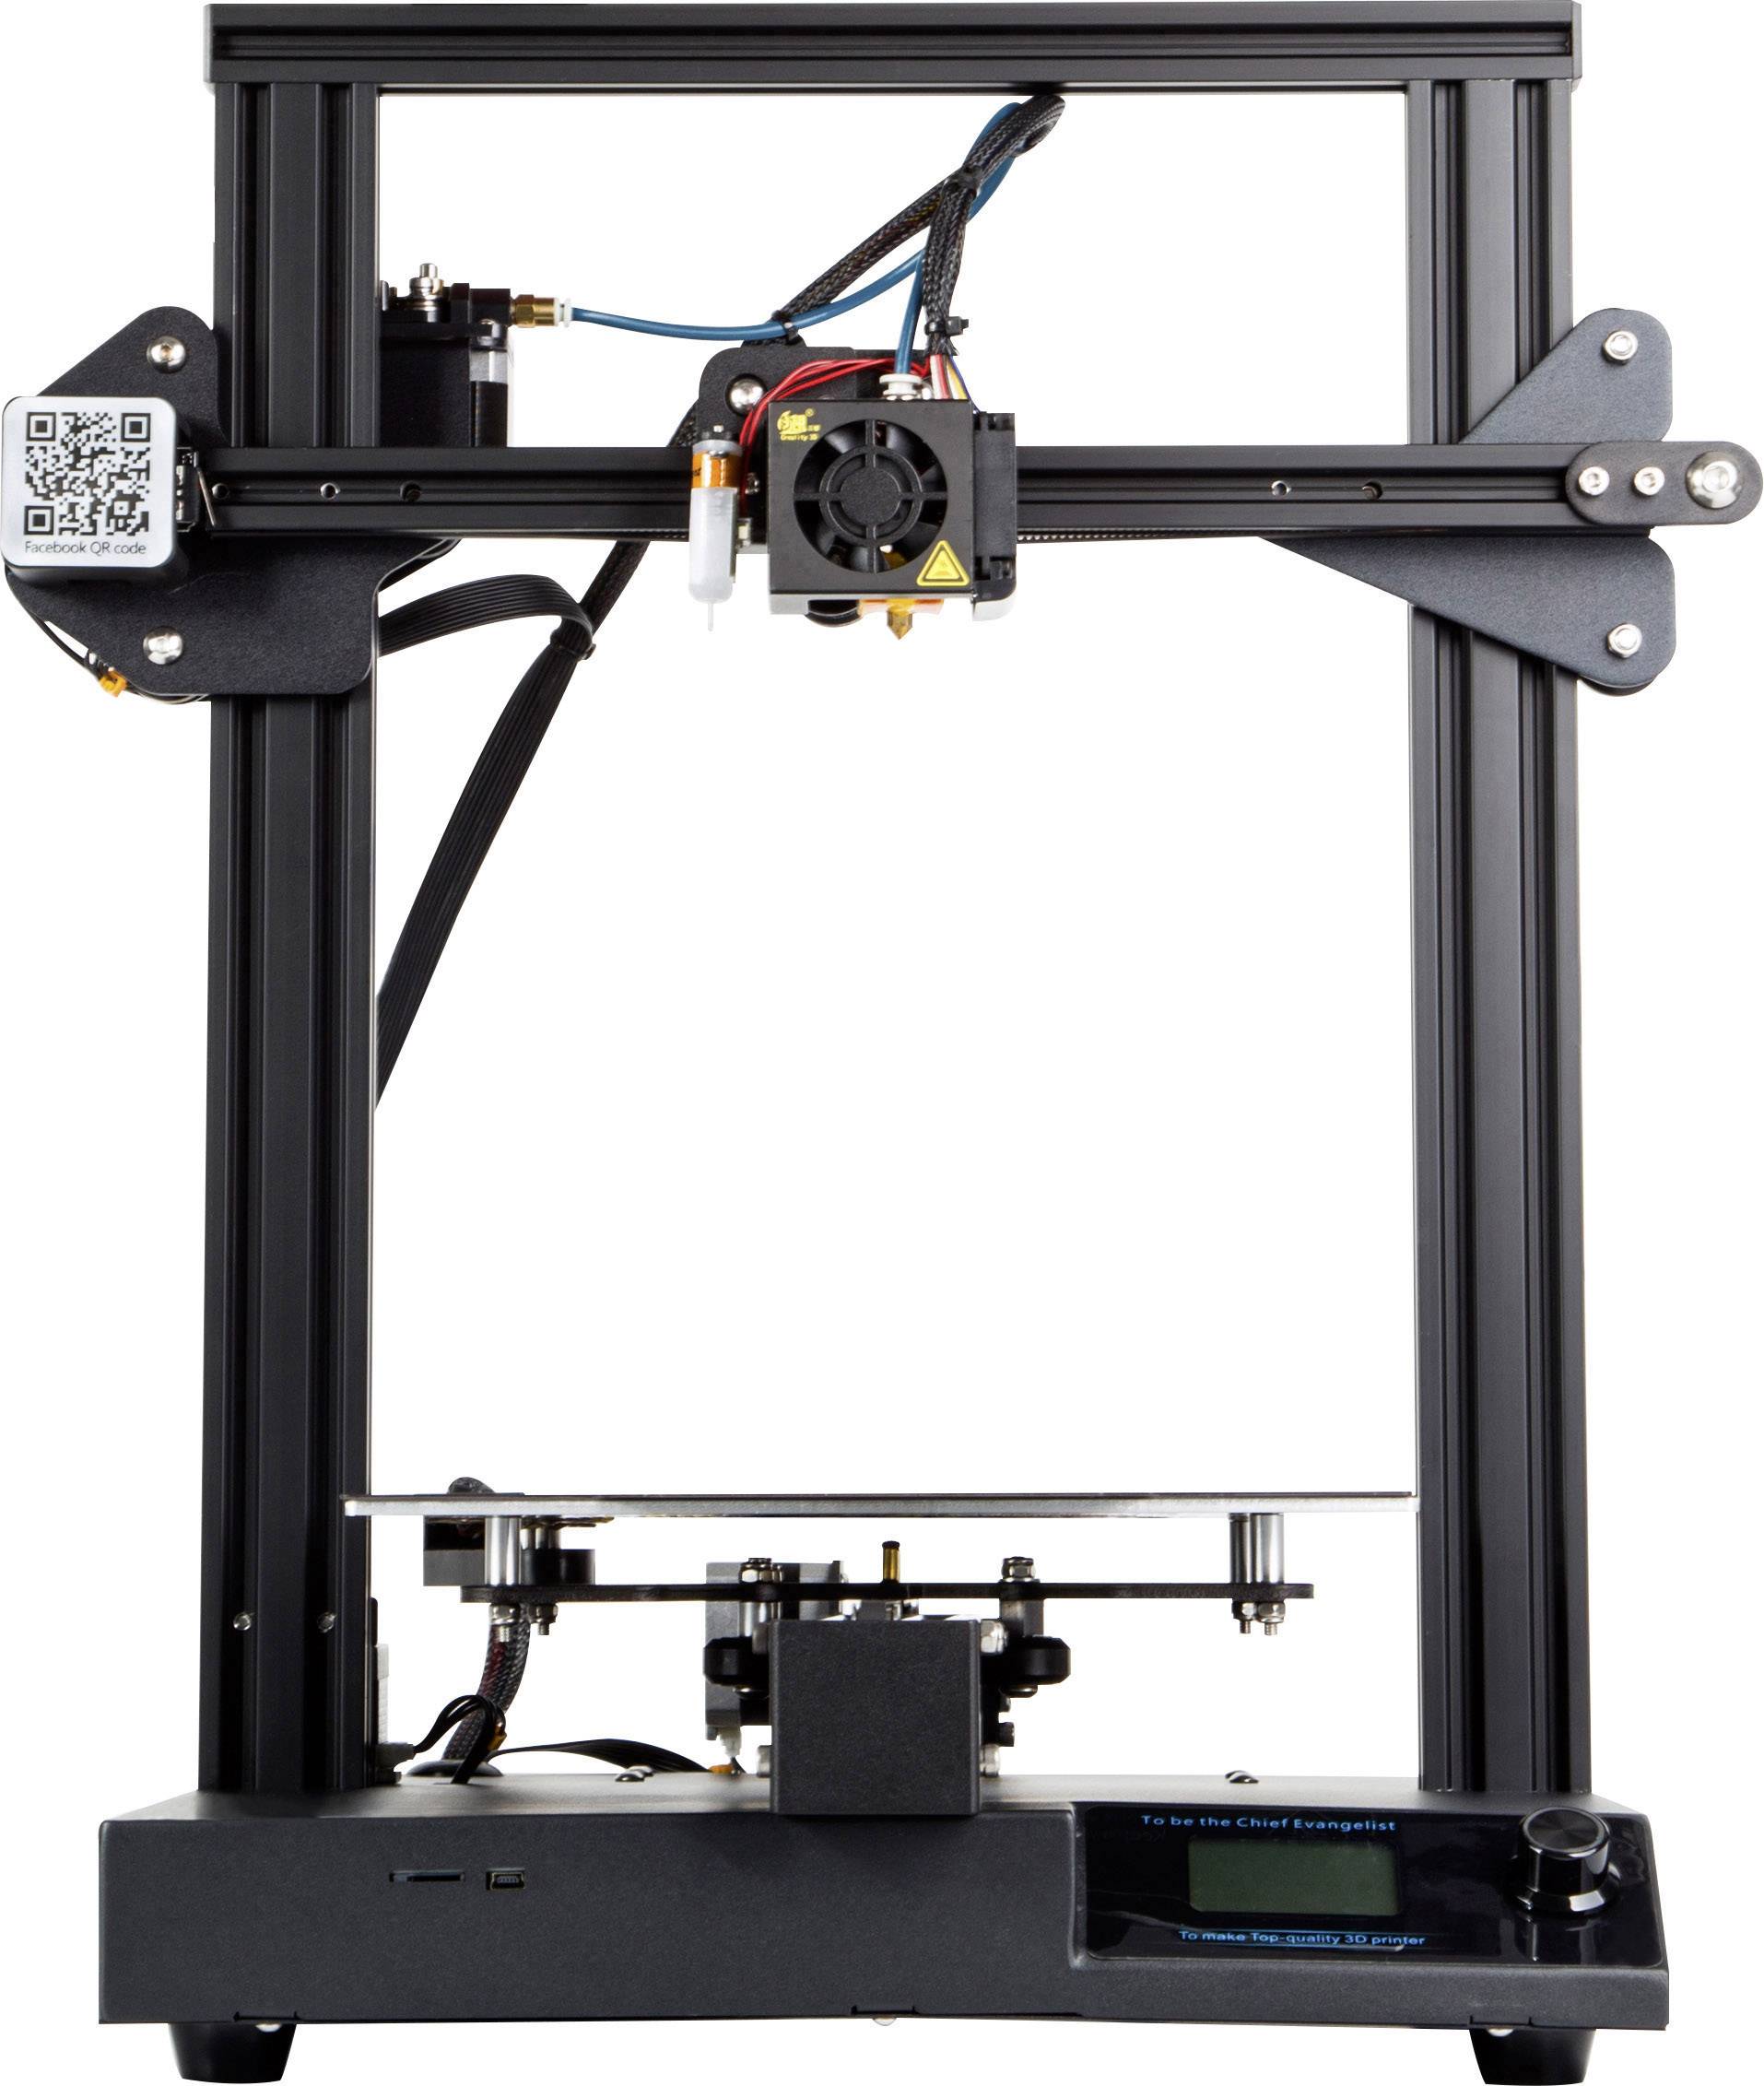 Creality Pro 3D printer assembly kit types | Conrad.com